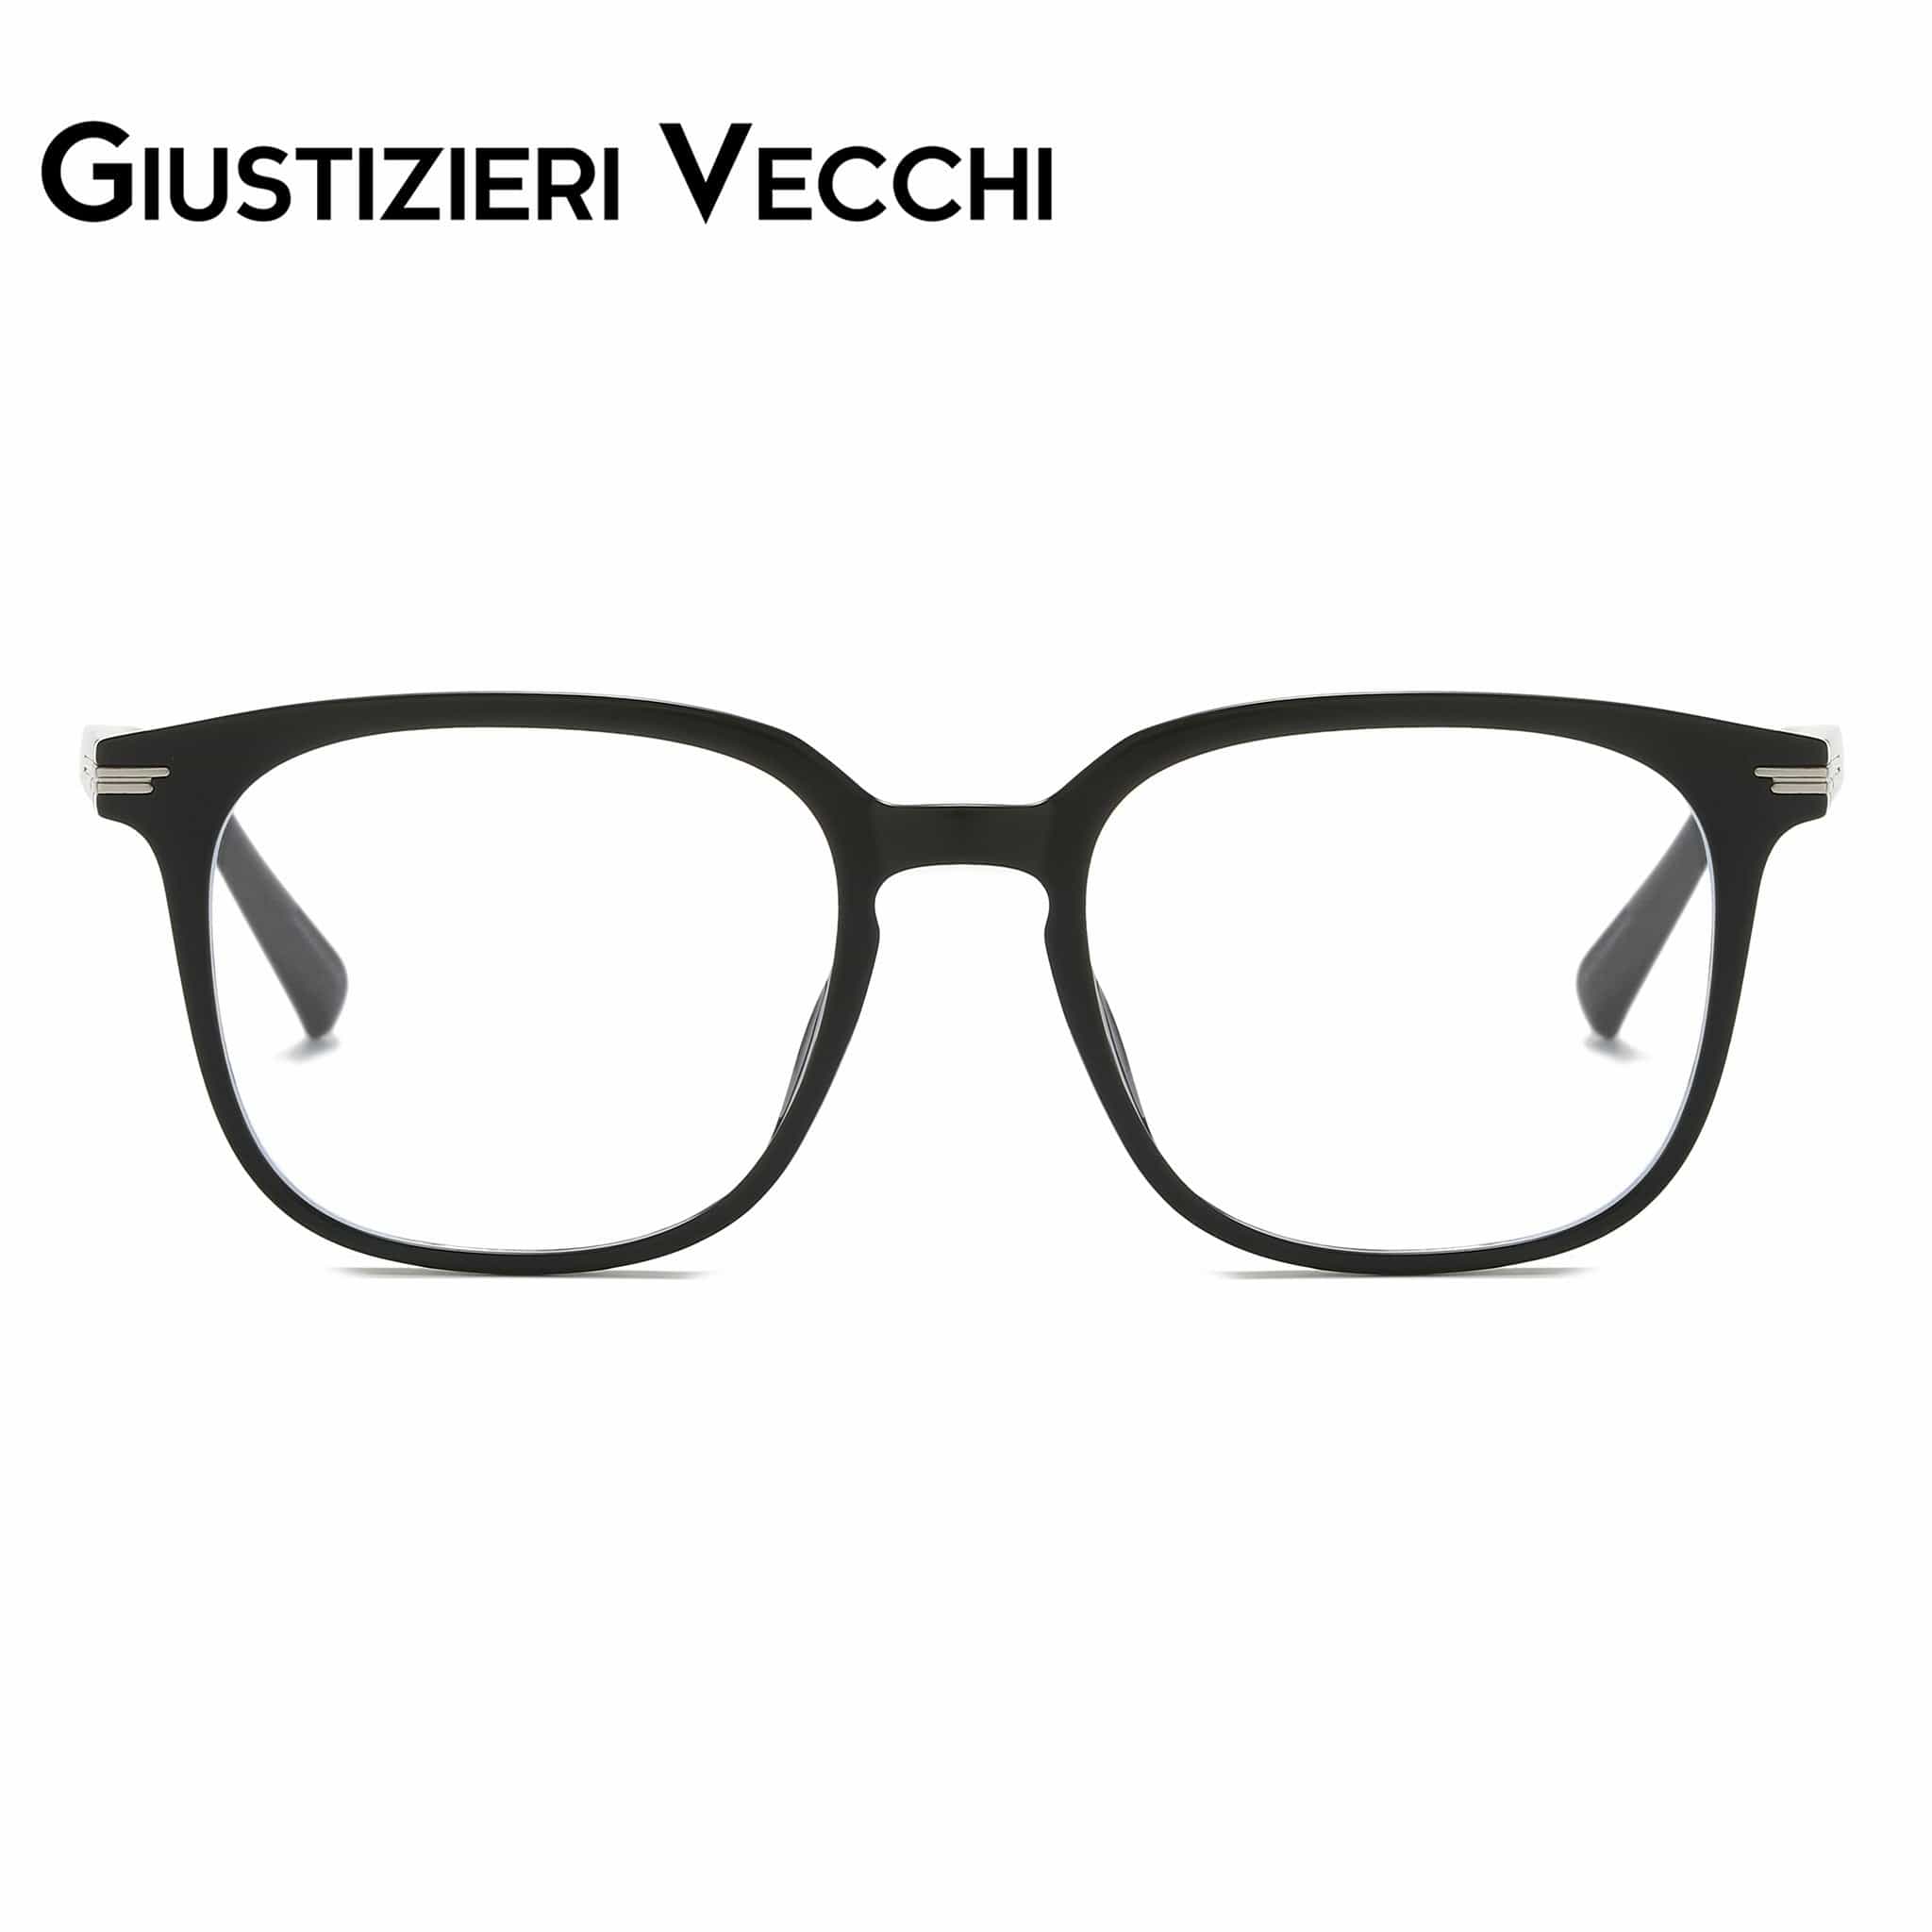 GIUSTIZIERI VECCHI Eyeglasses Medium / Black SkyBloom Uno